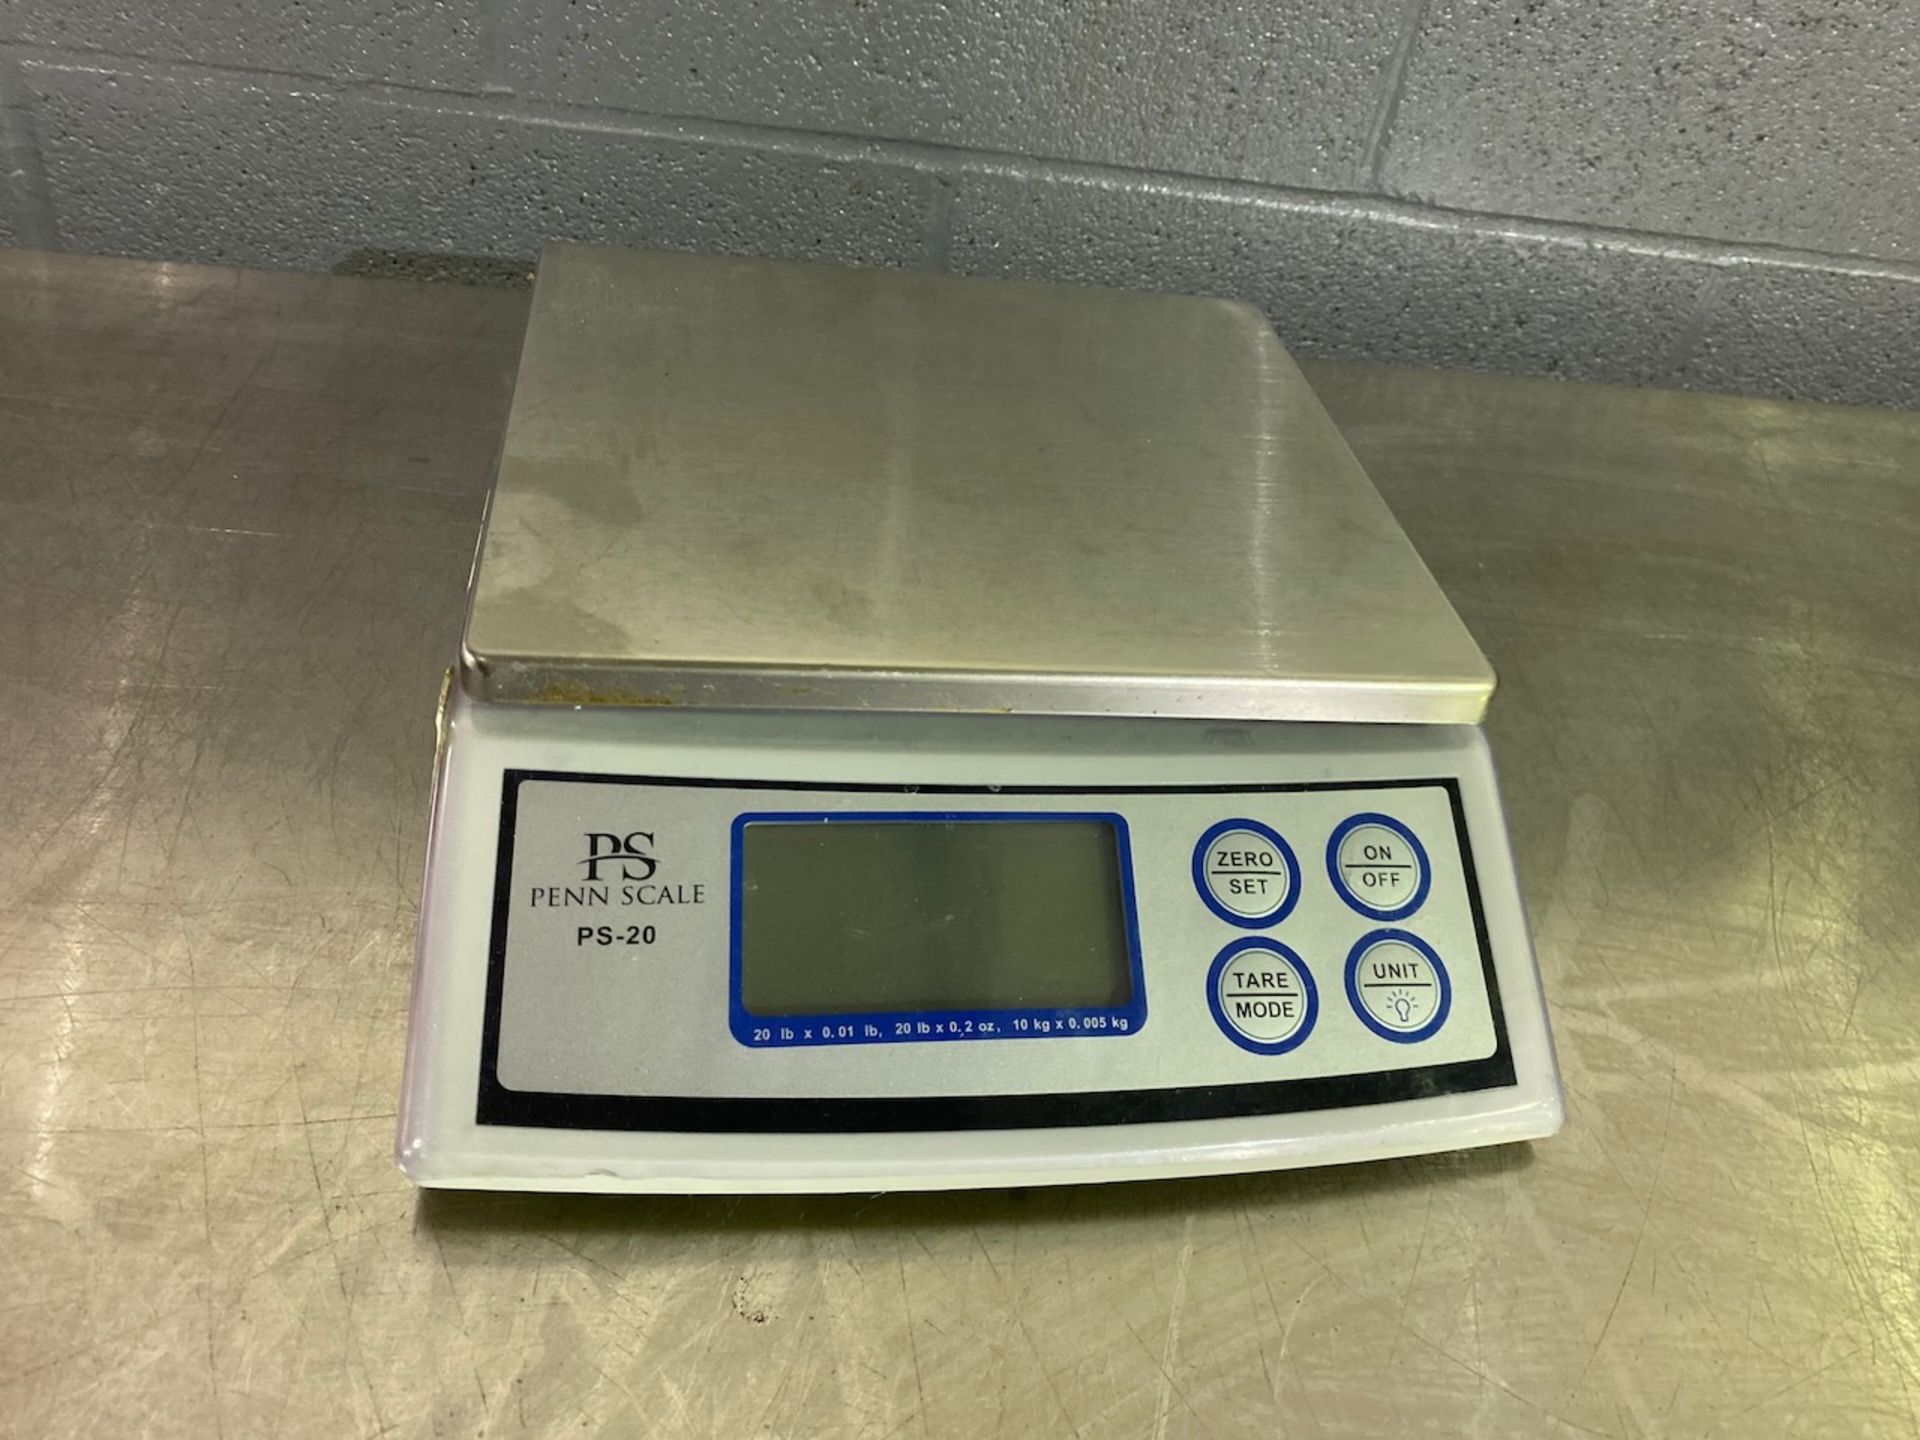 Penn Scale lab scale